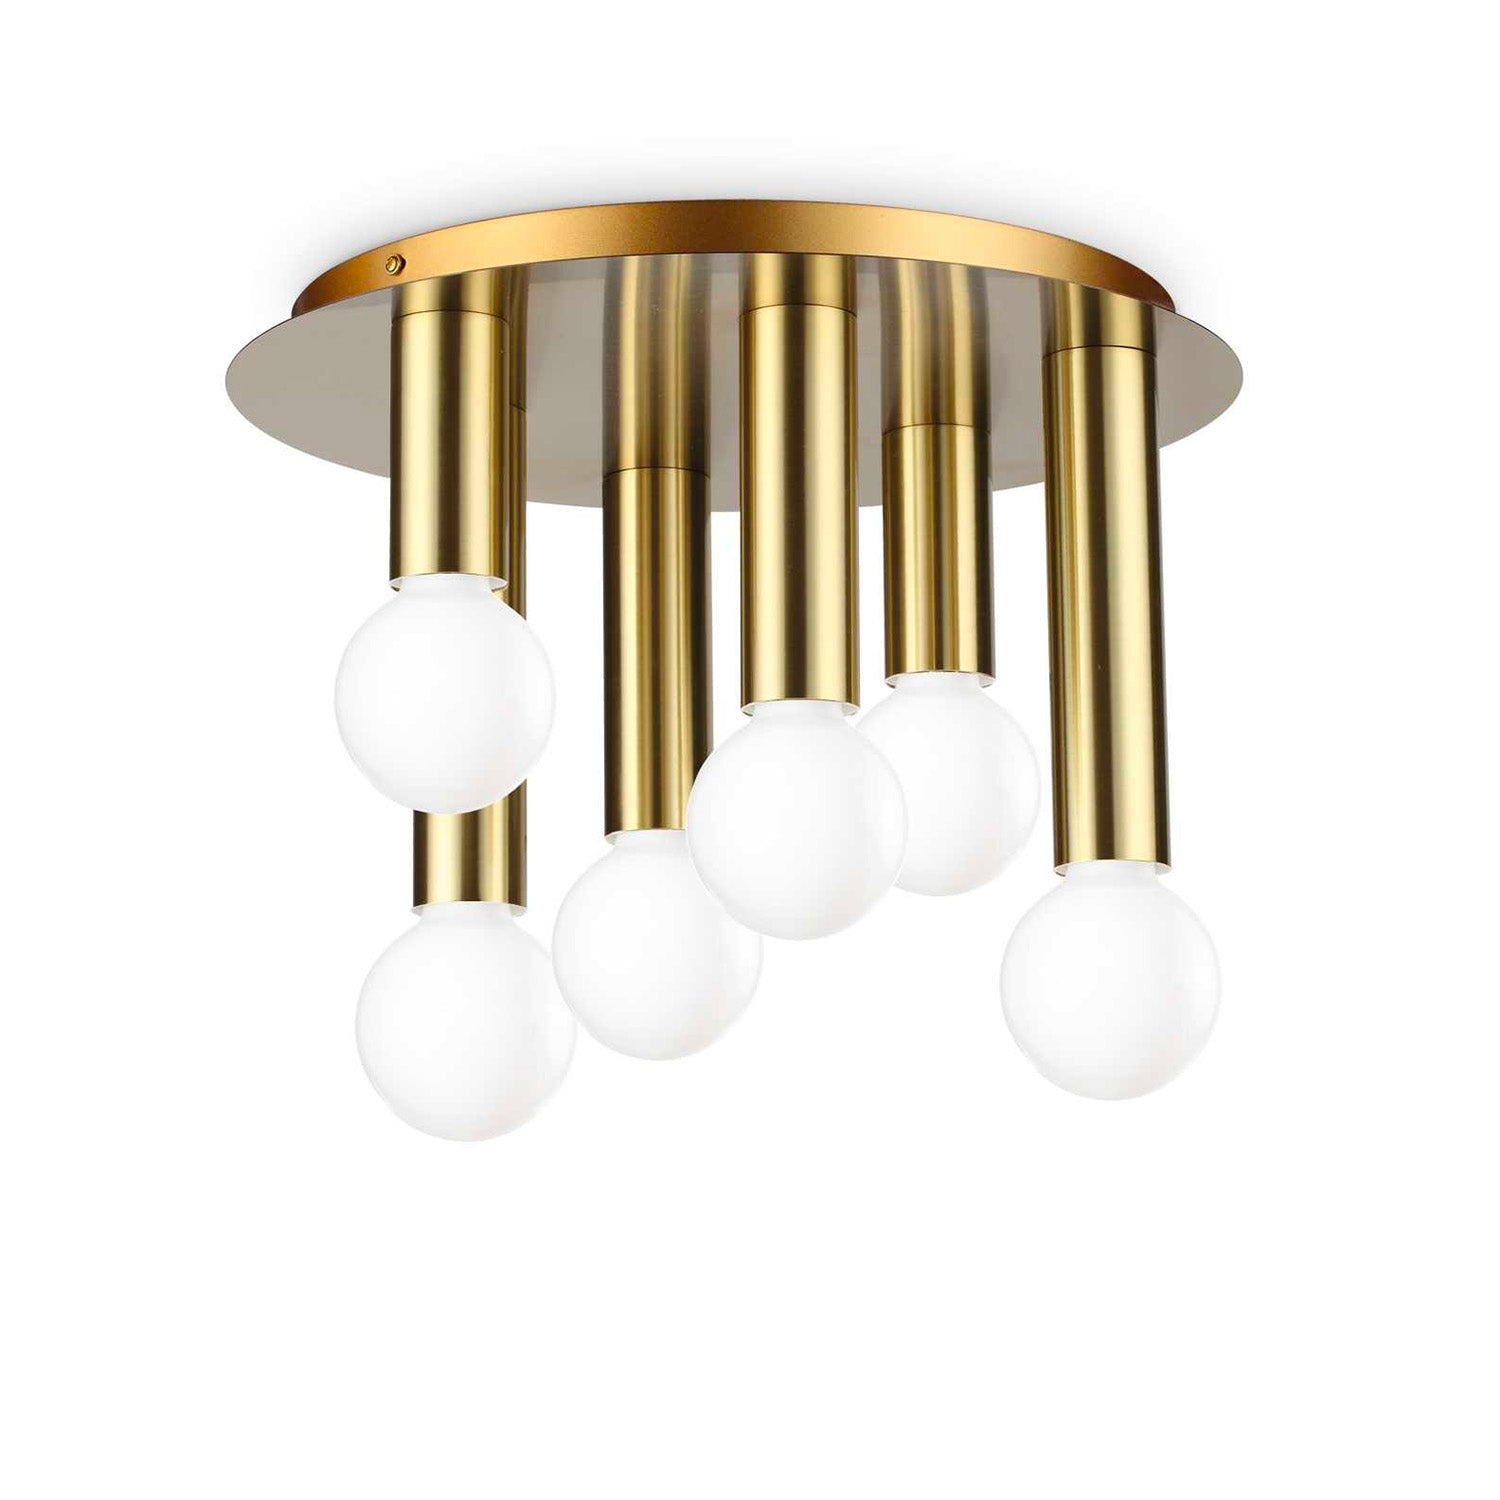 SMALL - Modern ceiling light in gold, black or white